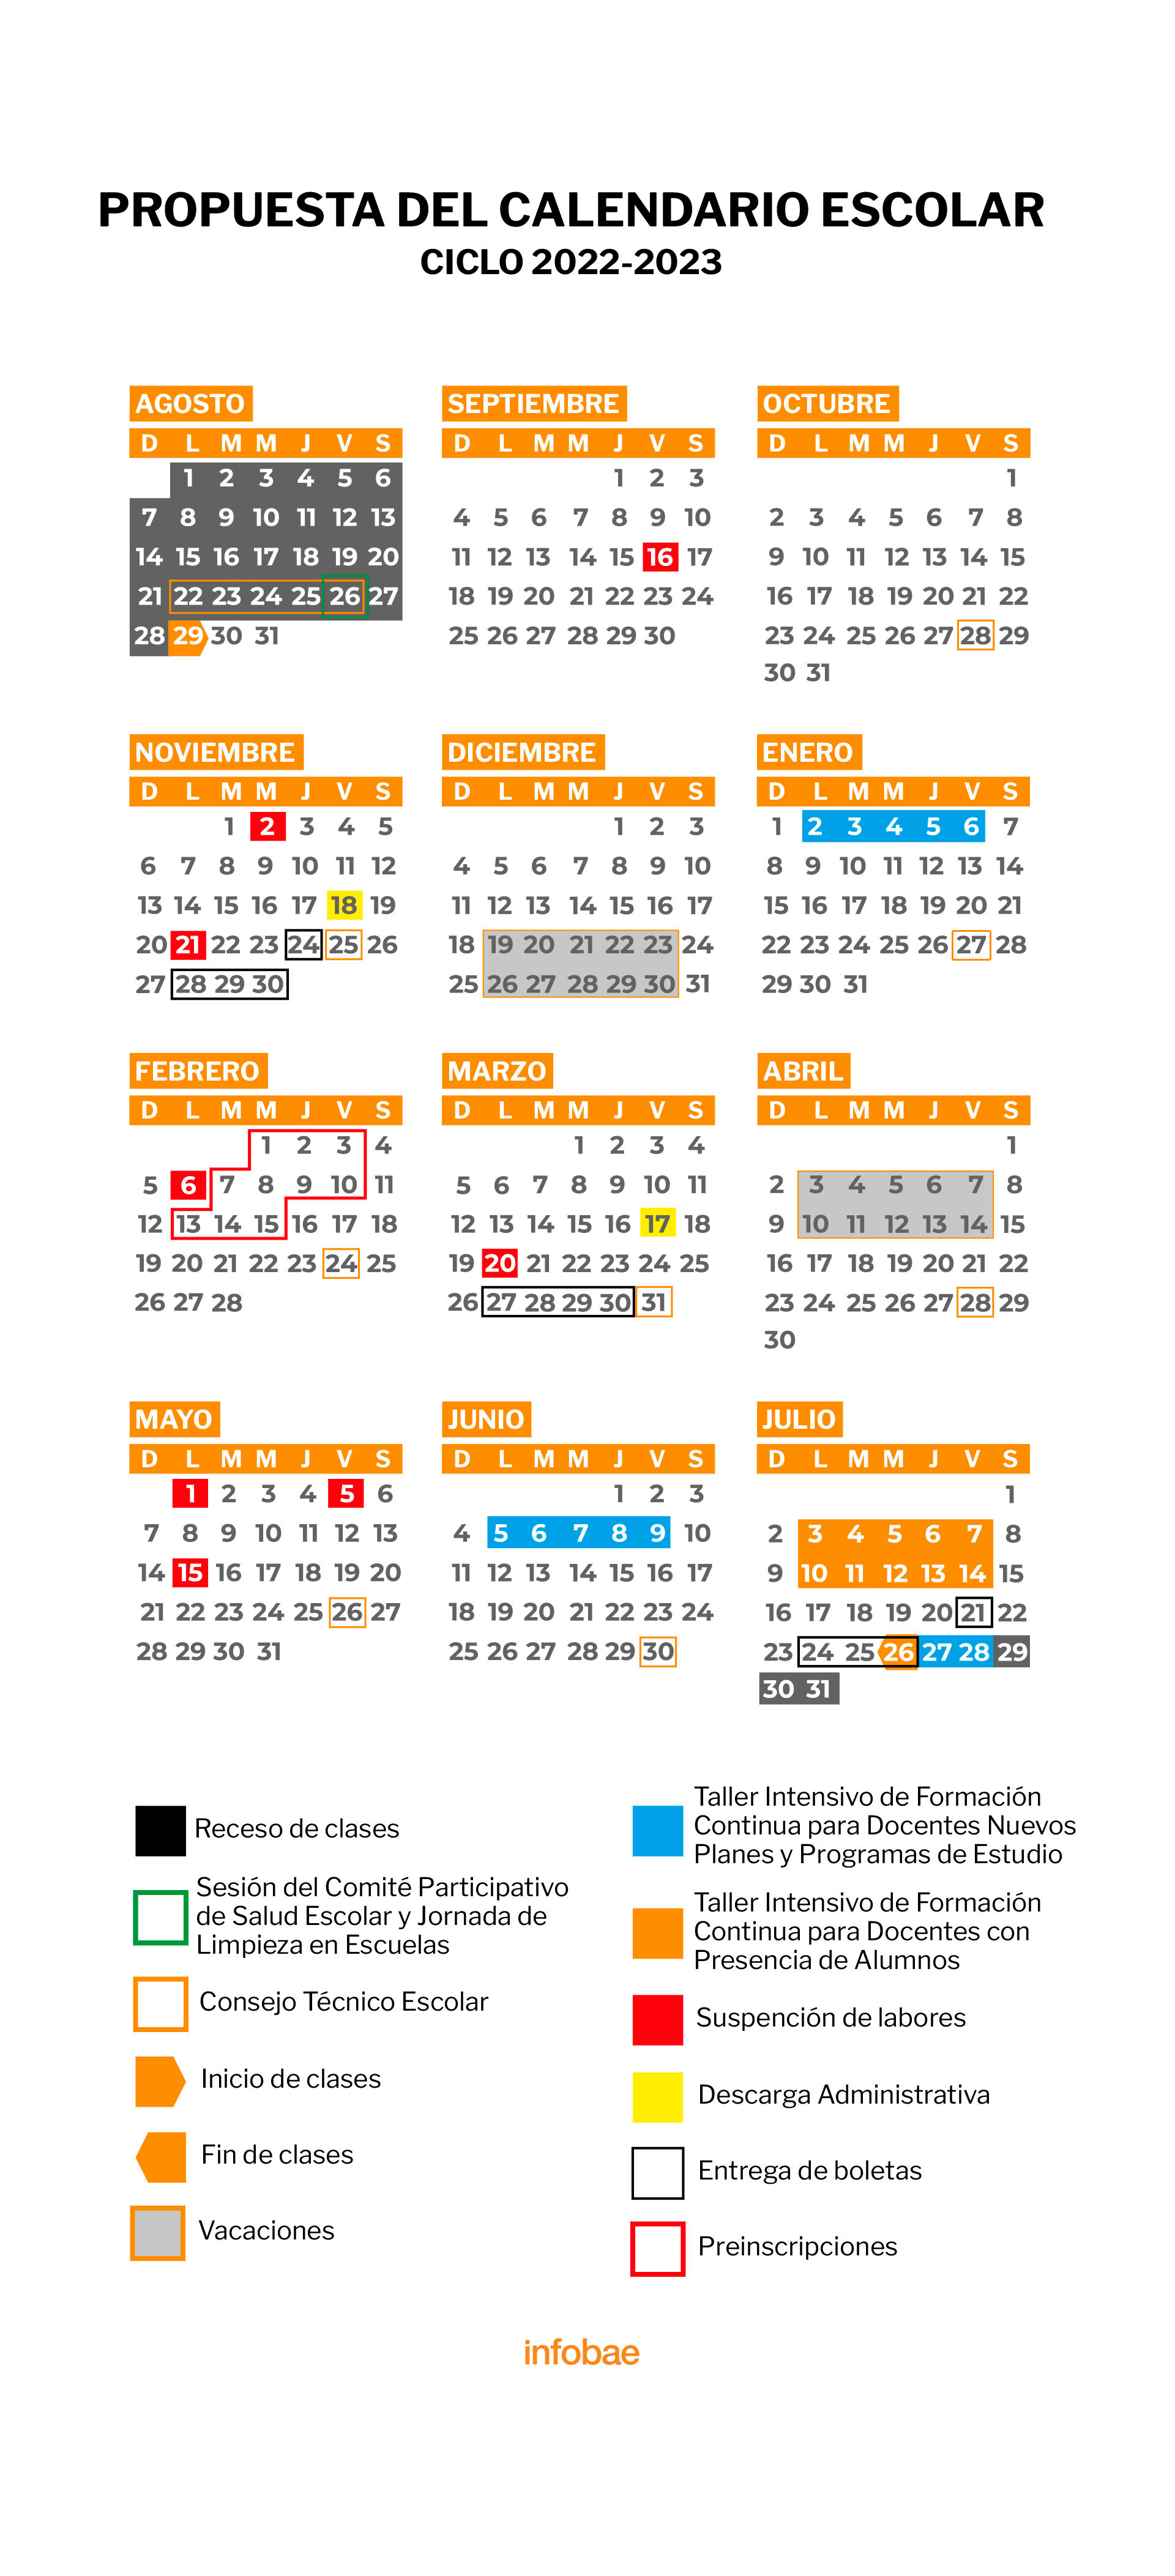 Calendario Oficial de la SEP 2022-2023. (Foto: Infobae)